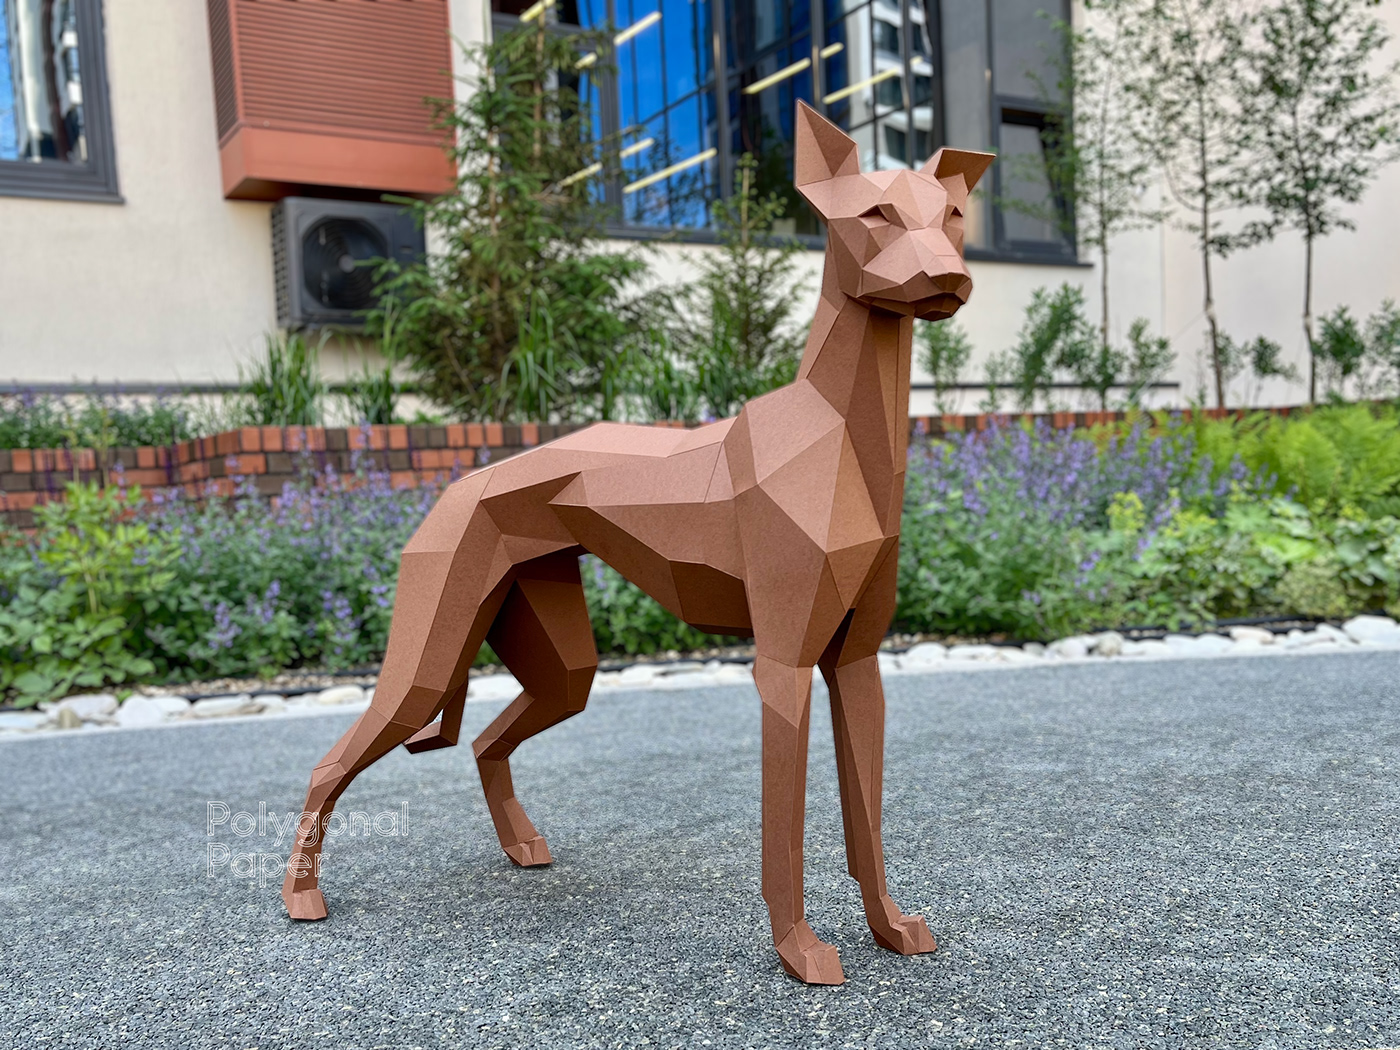 papercraft sculpture whippet paper Low Poly geometric decor 3D DIY dog